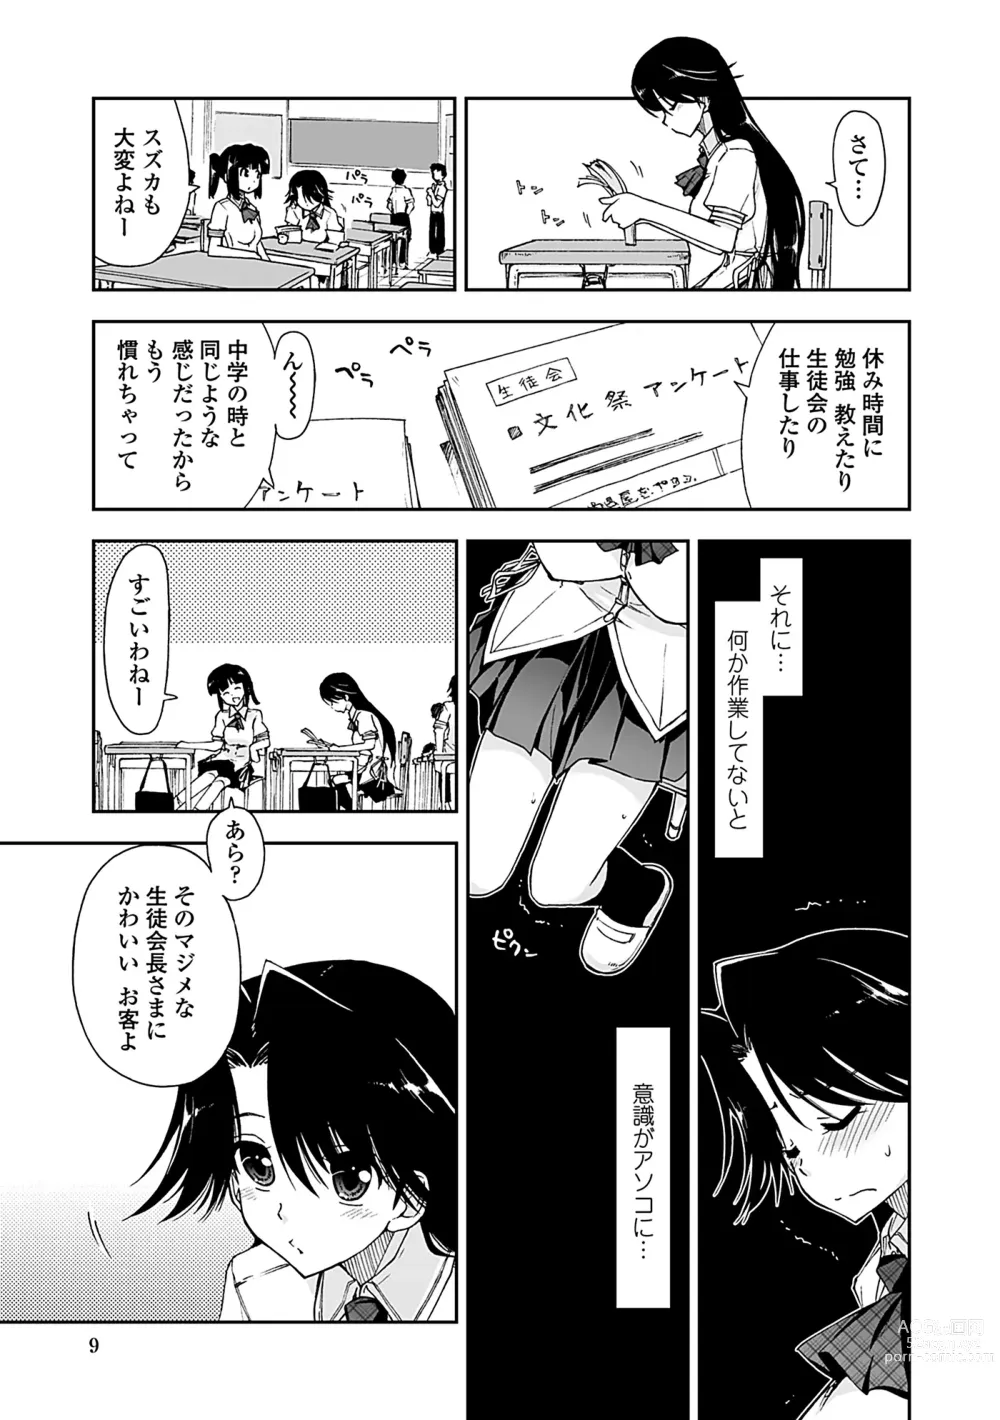 Page 7 of manga Kimochi Ii? x Kimochi Ii - Does it feel good? x Good feeling